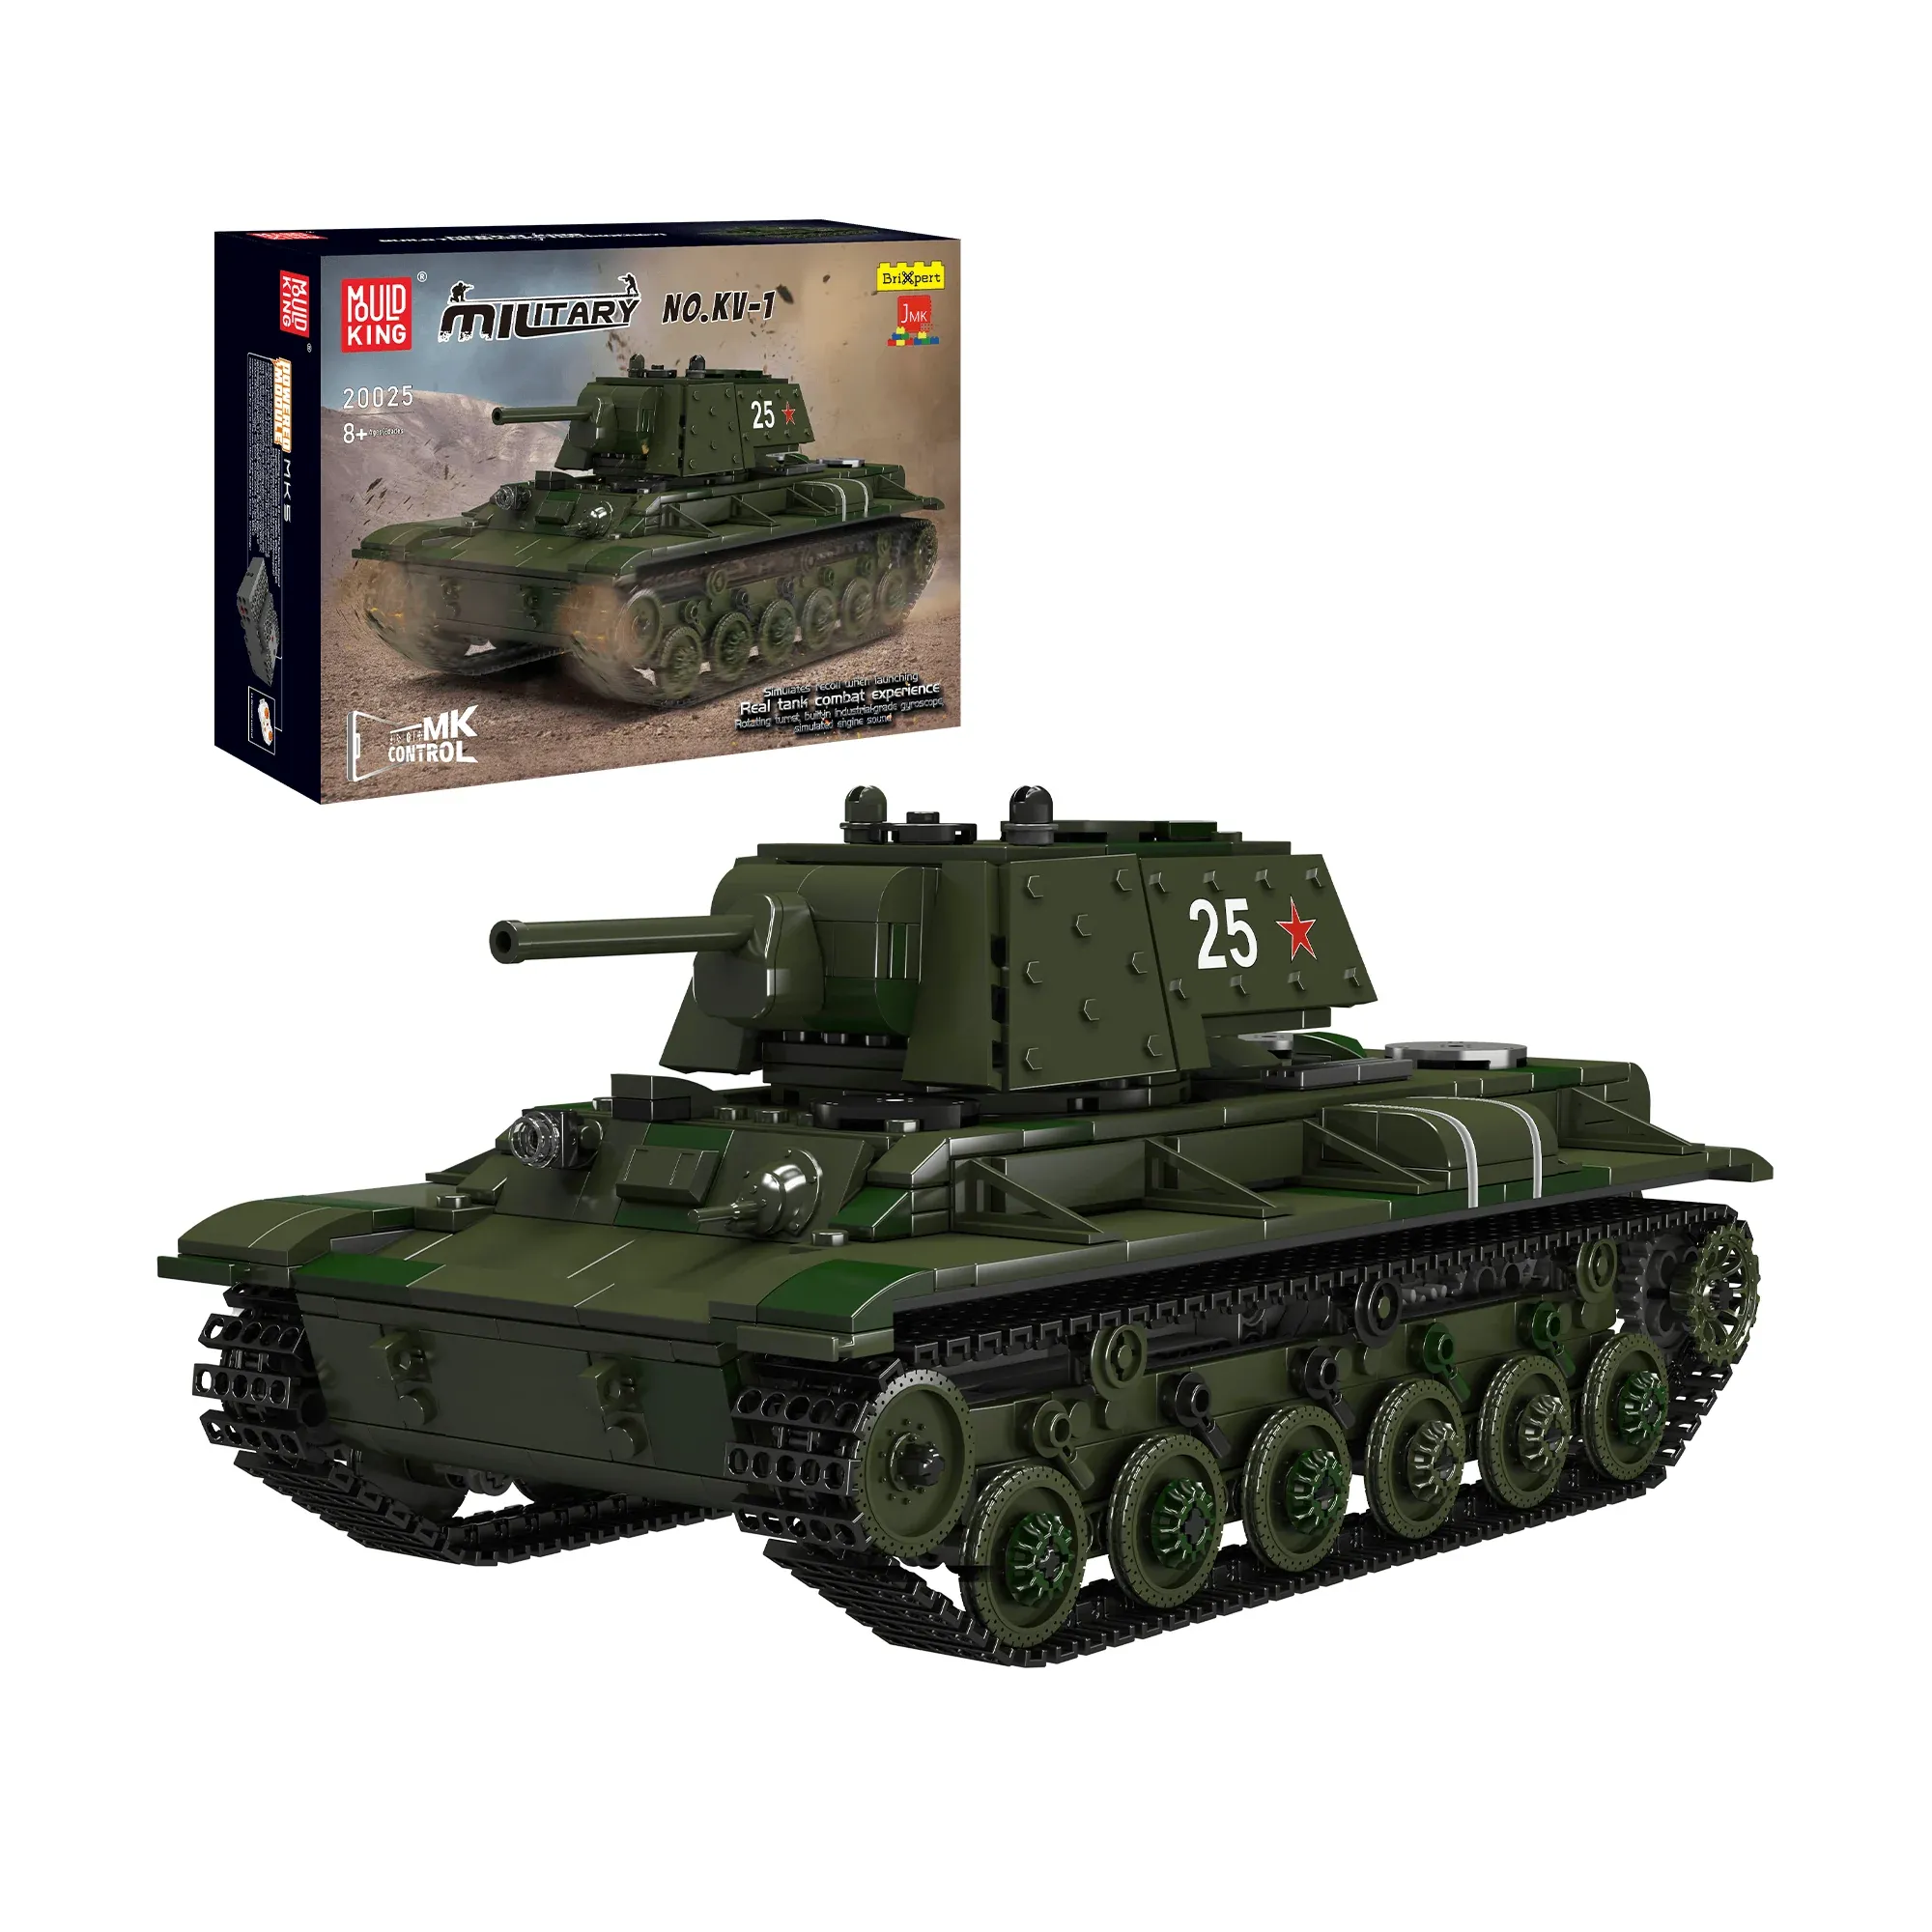 KV-1 Heavy Tank Gallery